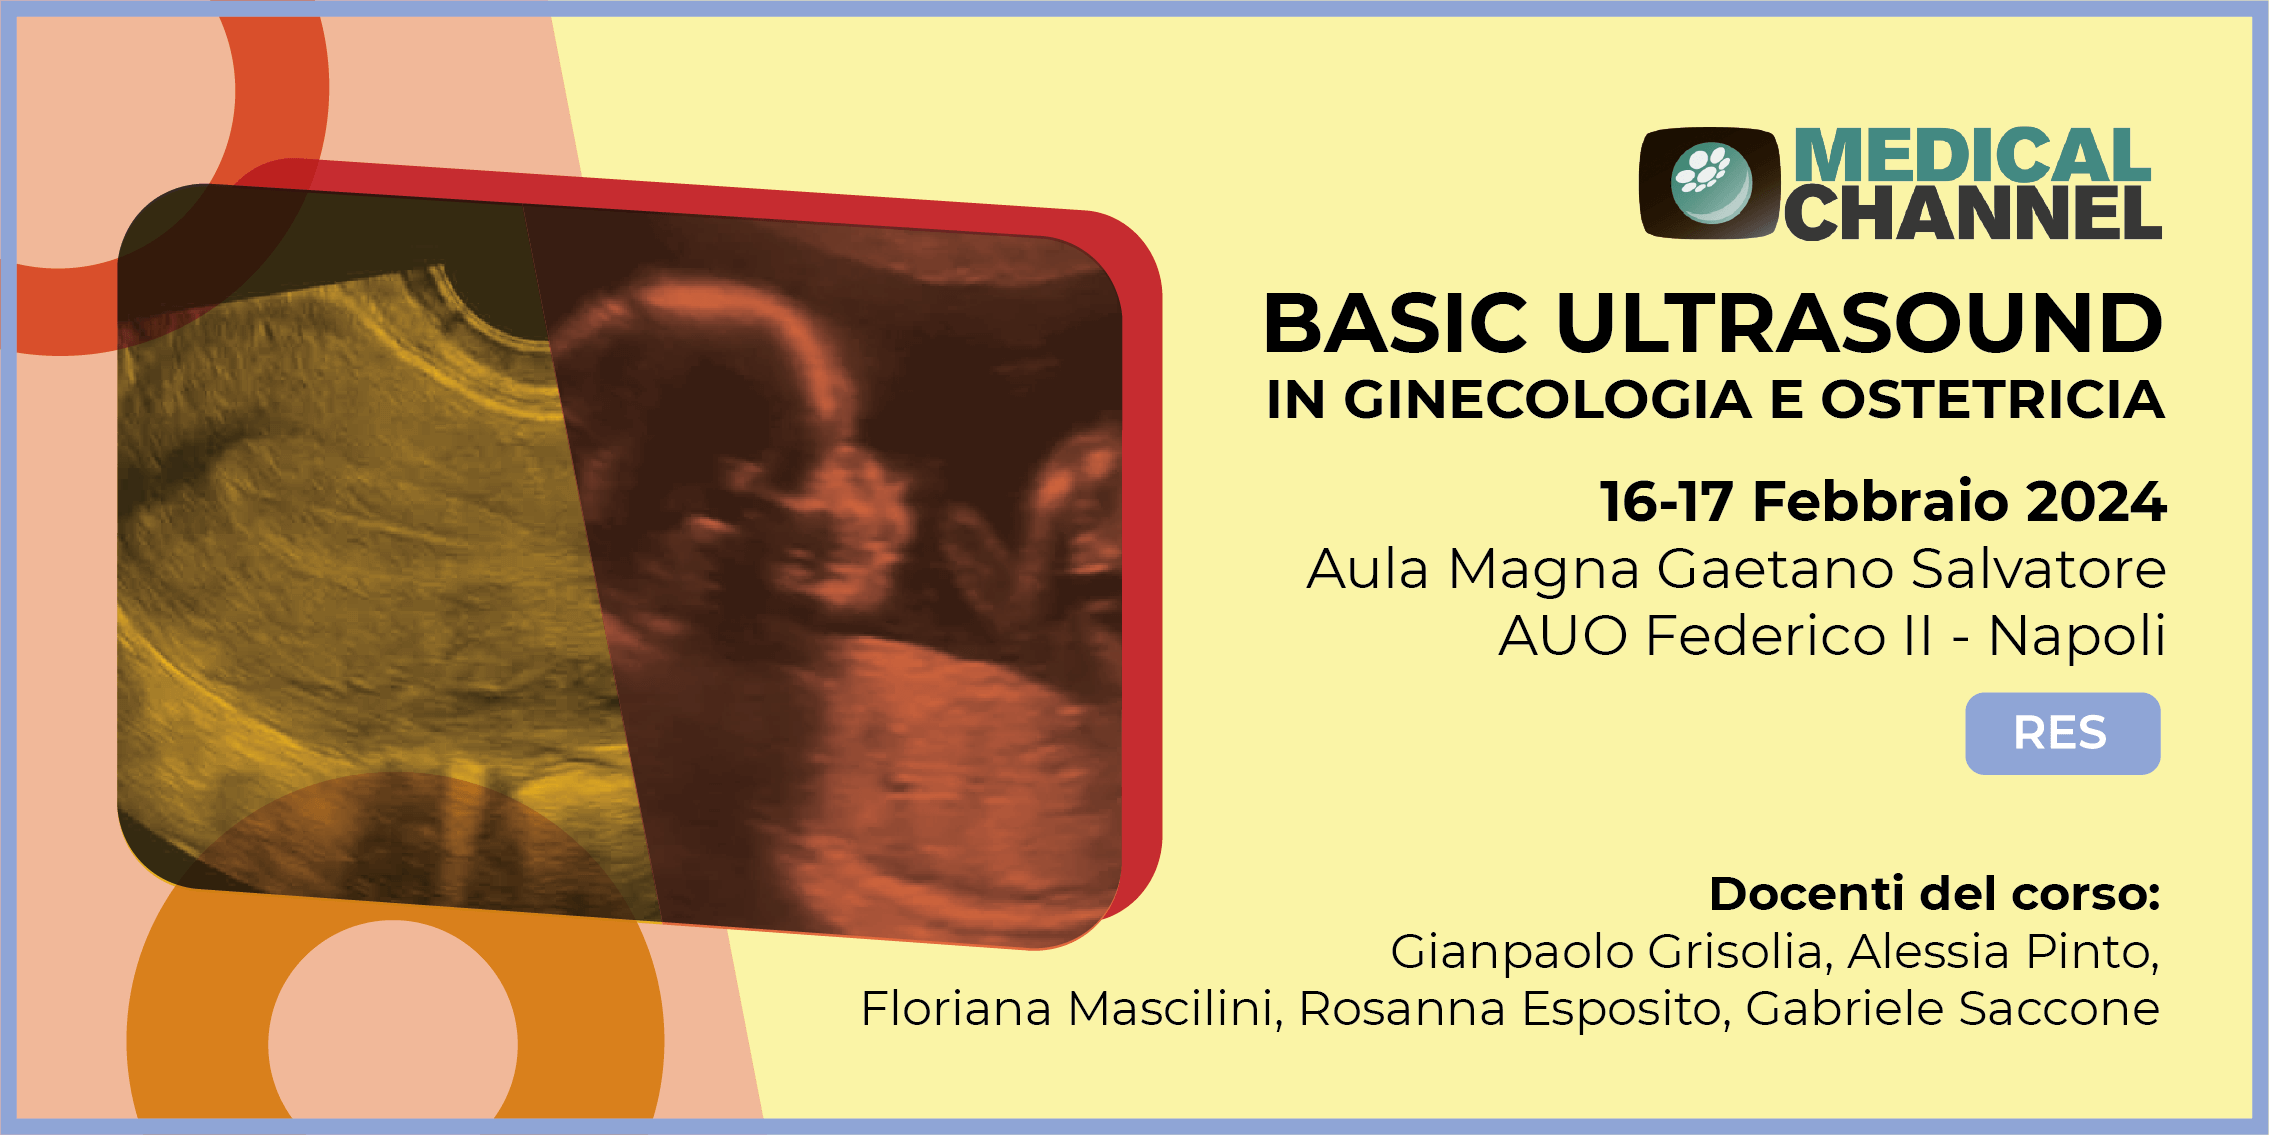 Basic Ultrasound in ginecologia e ostetricia 2024